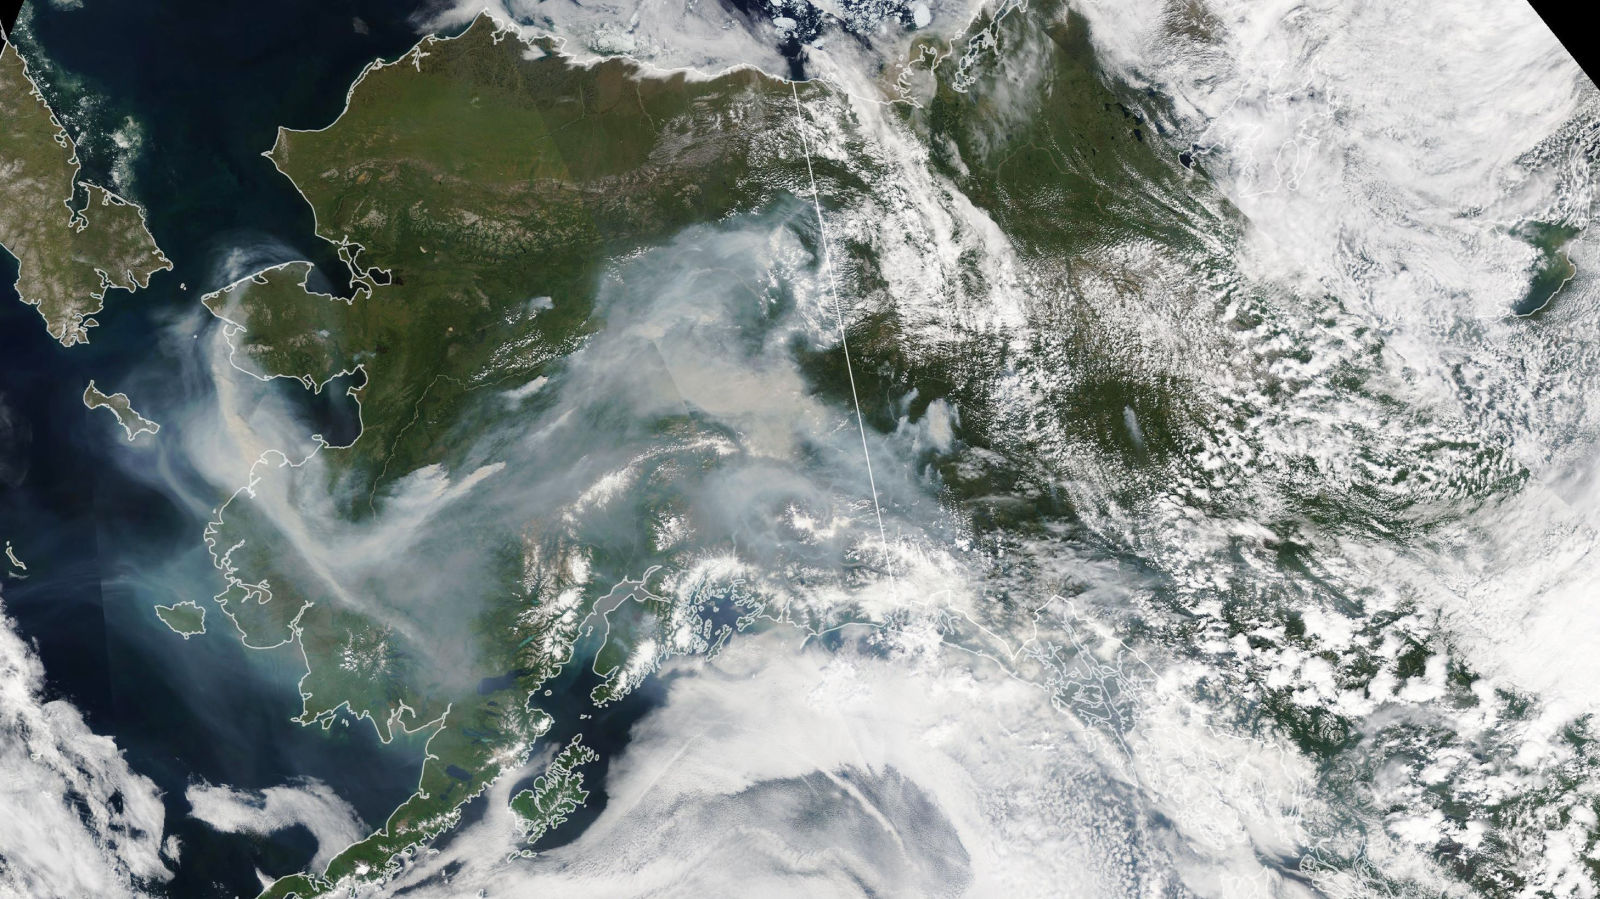 Alaska's wildfire season is exploding, spreading smoke across the state